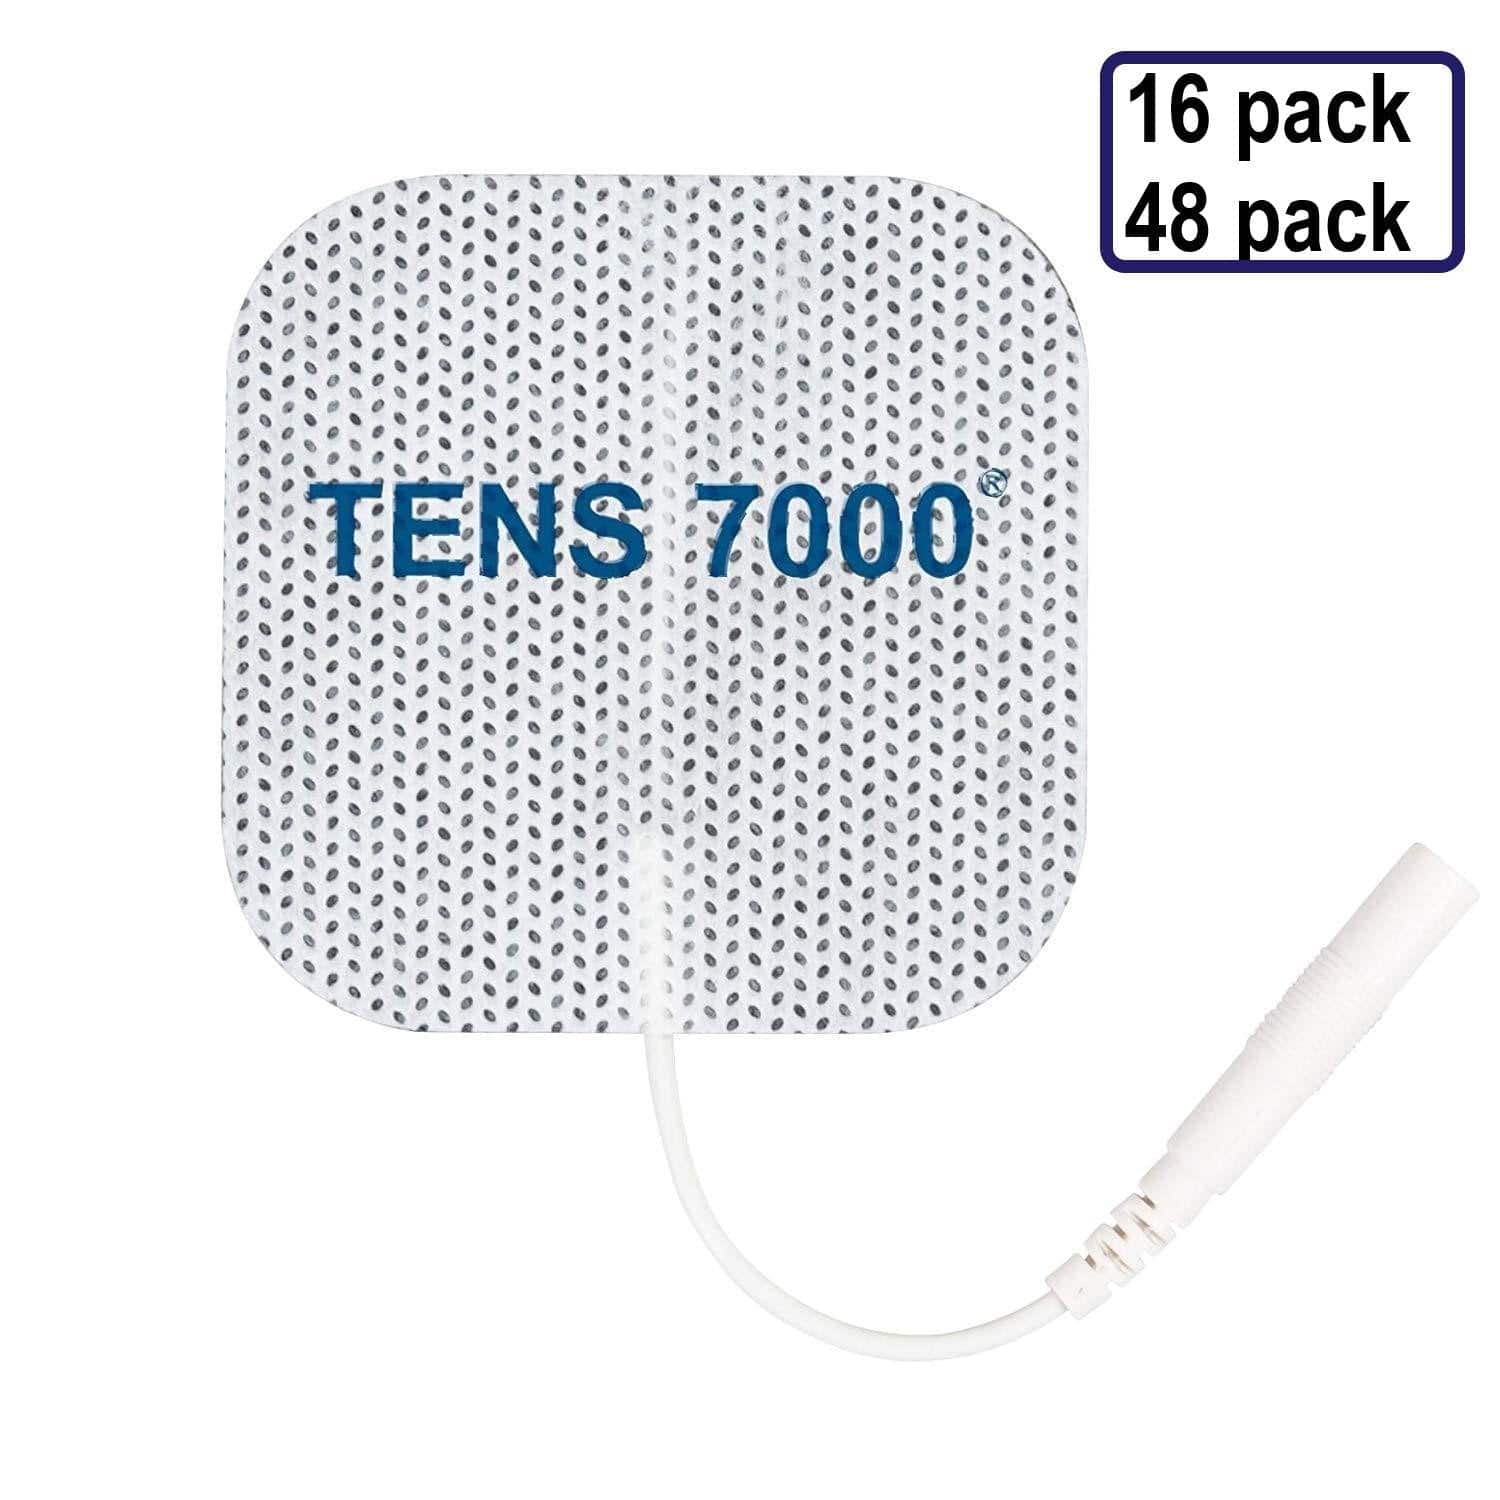 TENS 7000 Rechargeable TENS Unit - Conquer Your Pain